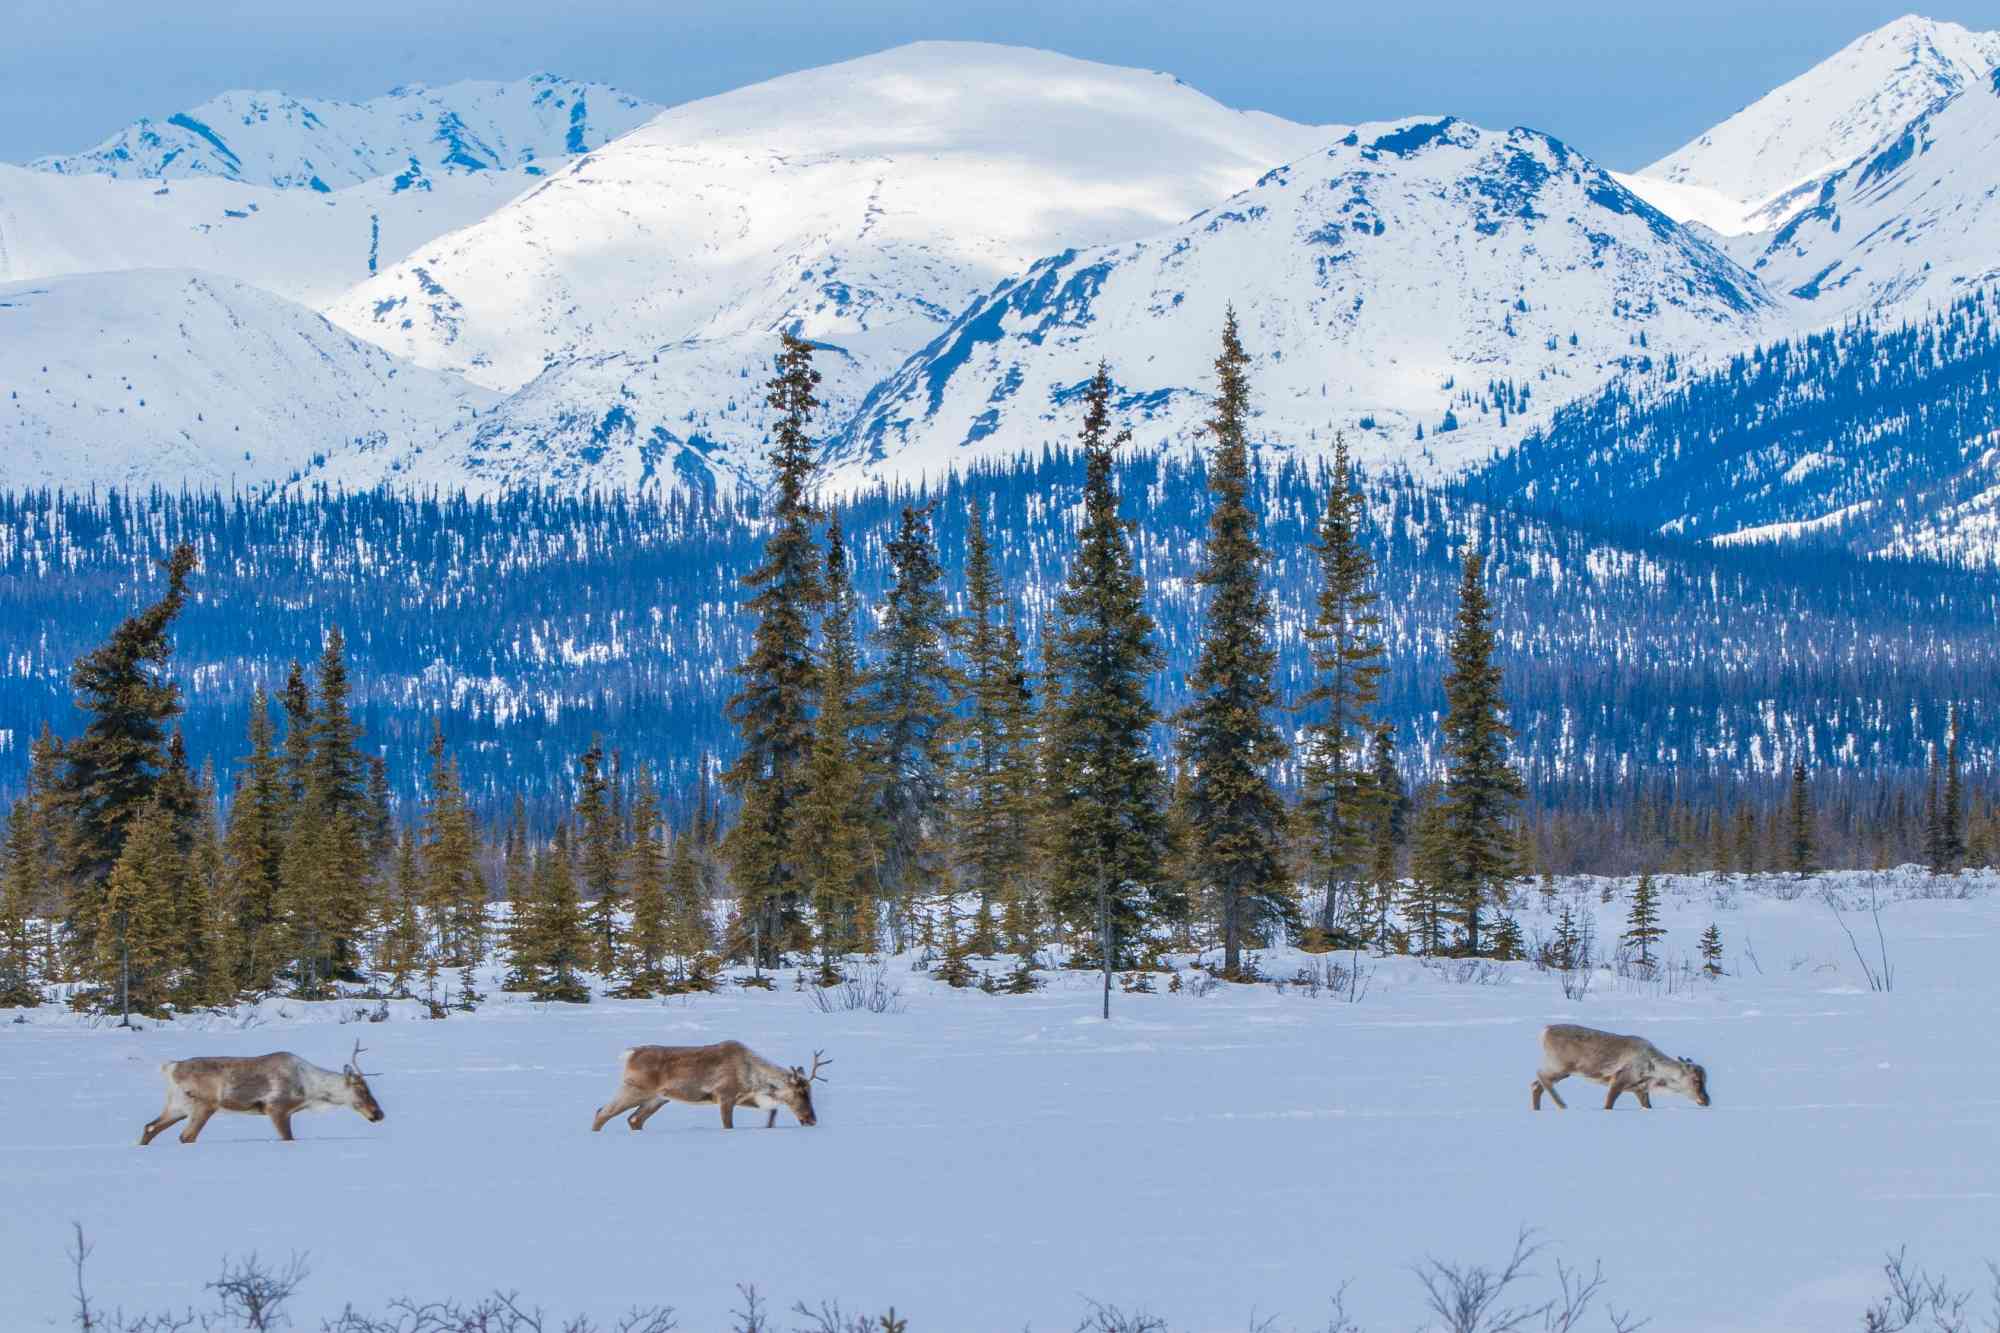 Porcupine caribou, Arctic Refuge, Alaska